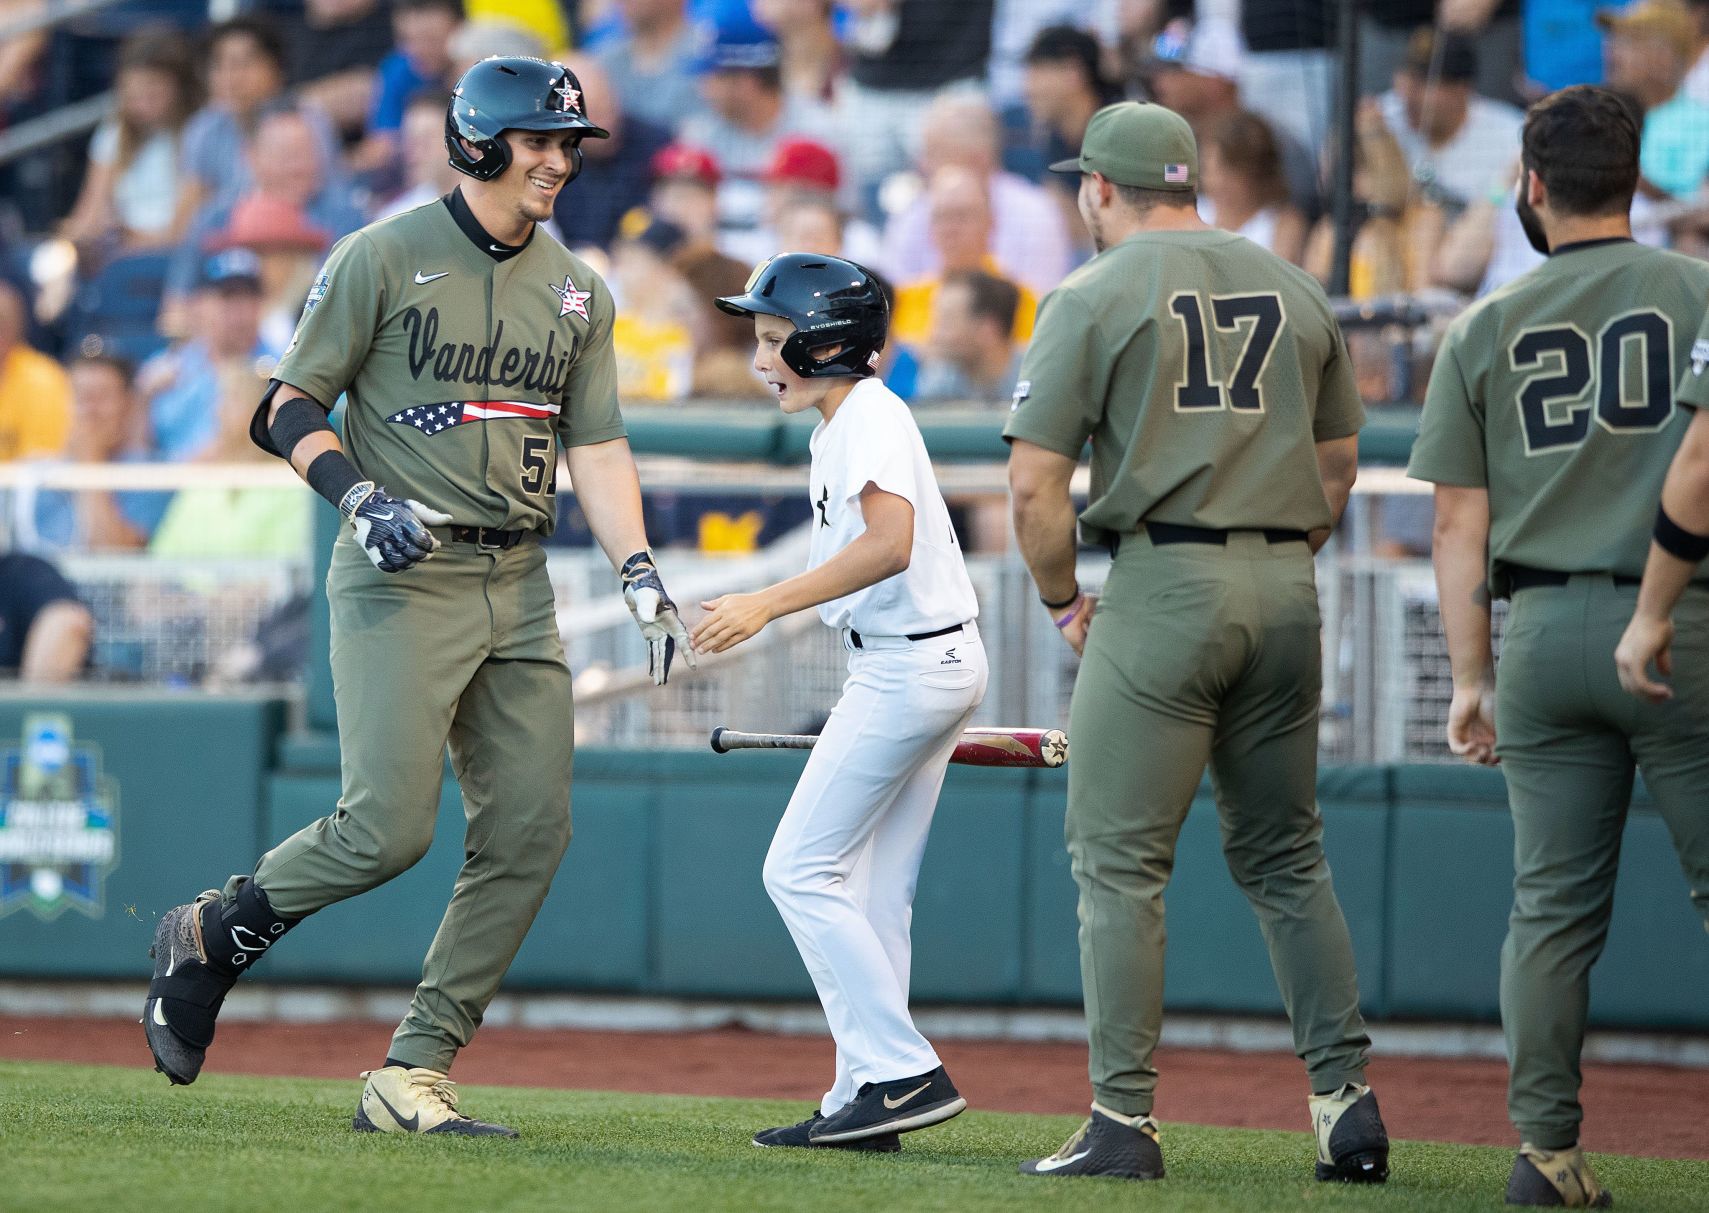 vanderbilt baseball salute to service jersey